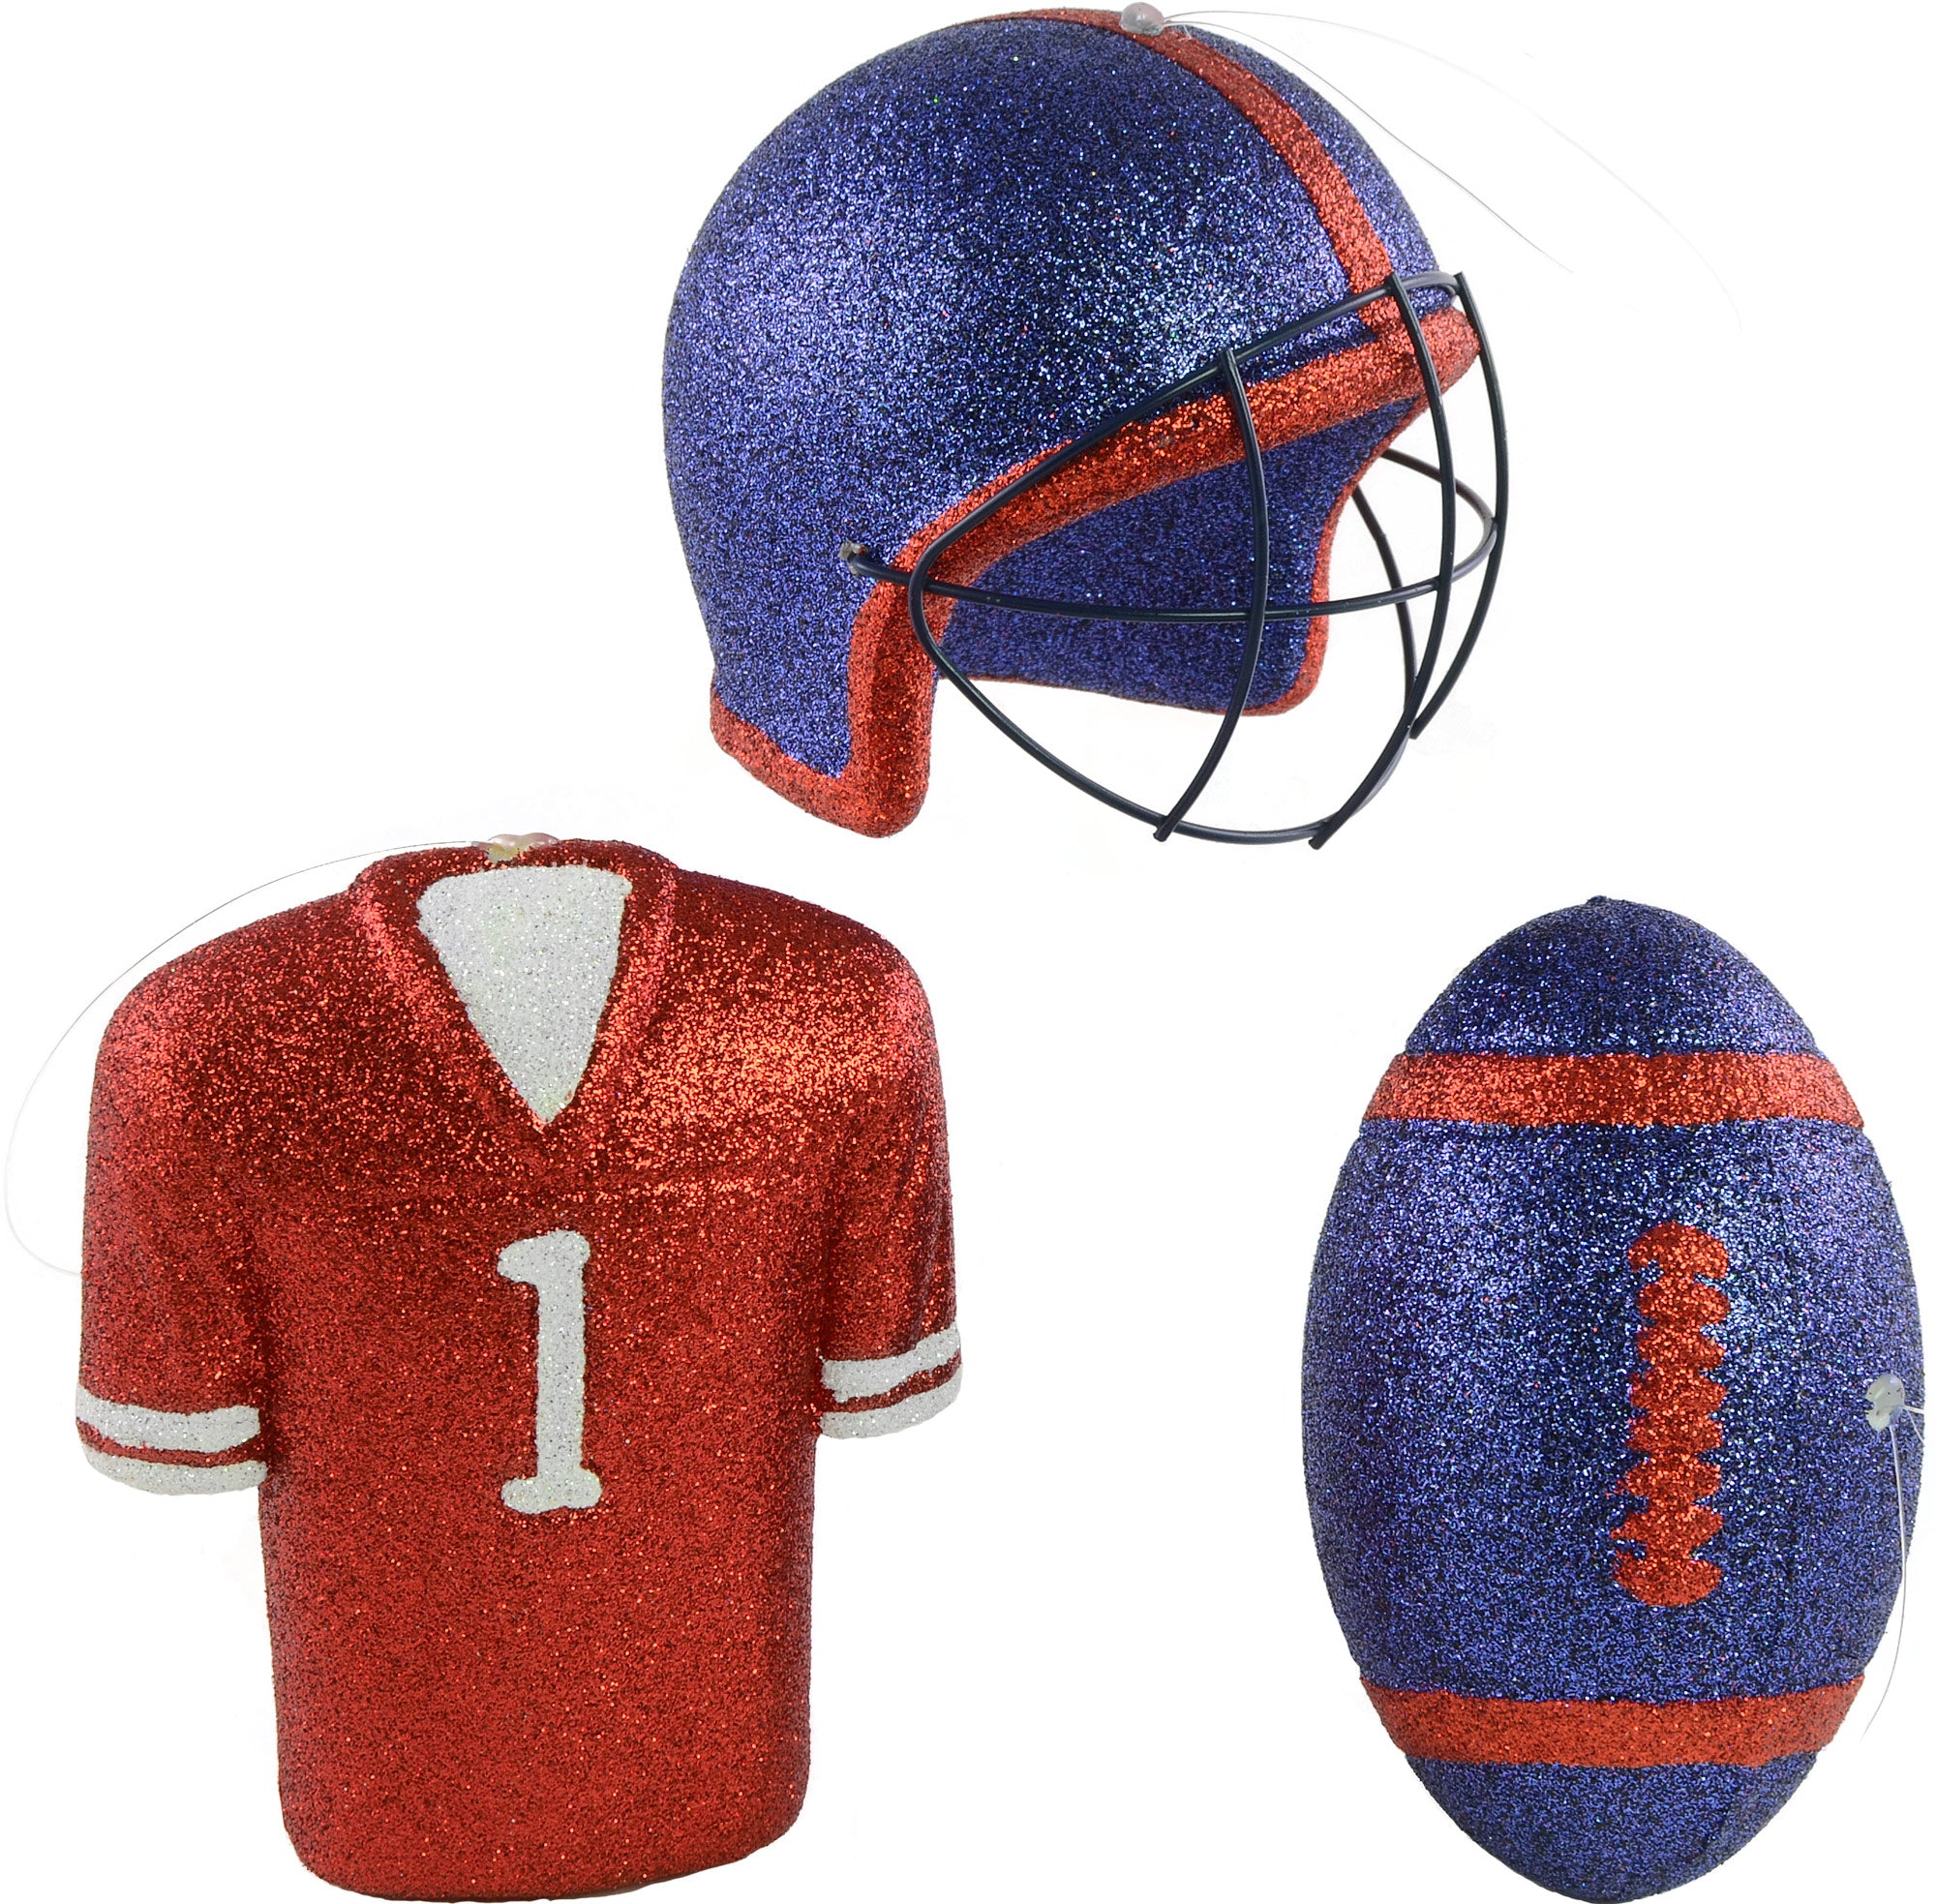 Glitter Football Ornament Assortment: Red & Navy Blue (Set of 3)